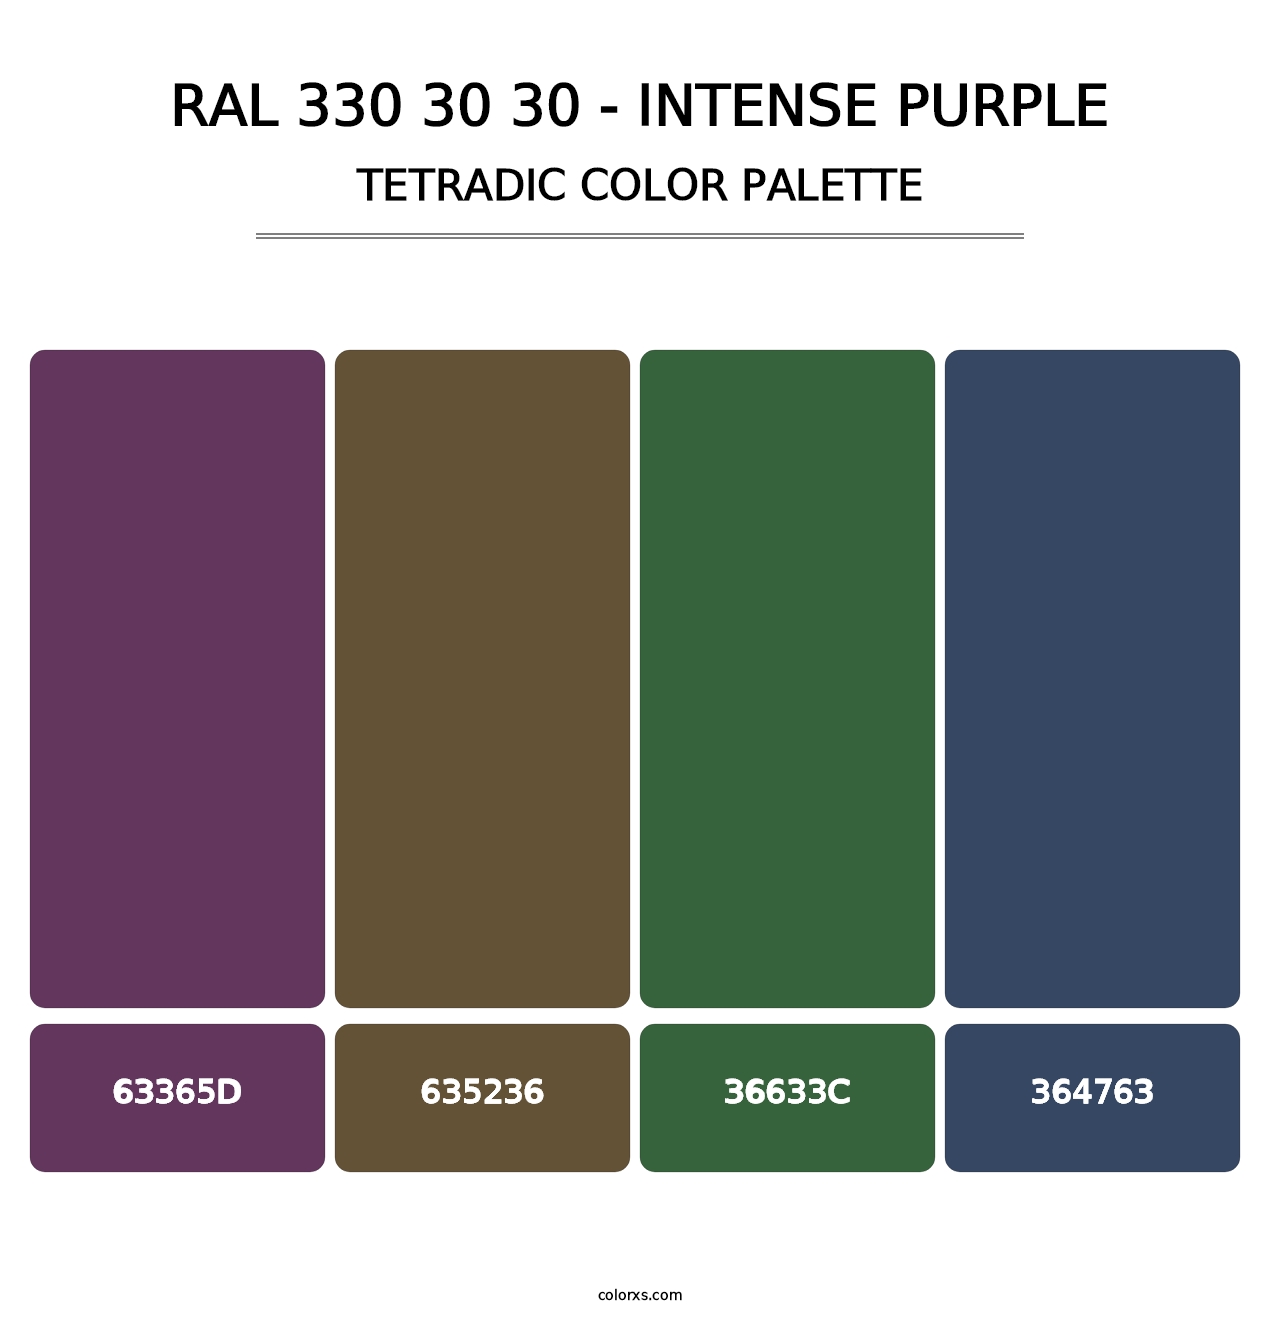 RAL 330 30 30 - Intense Purple - Tetradic Color Palette